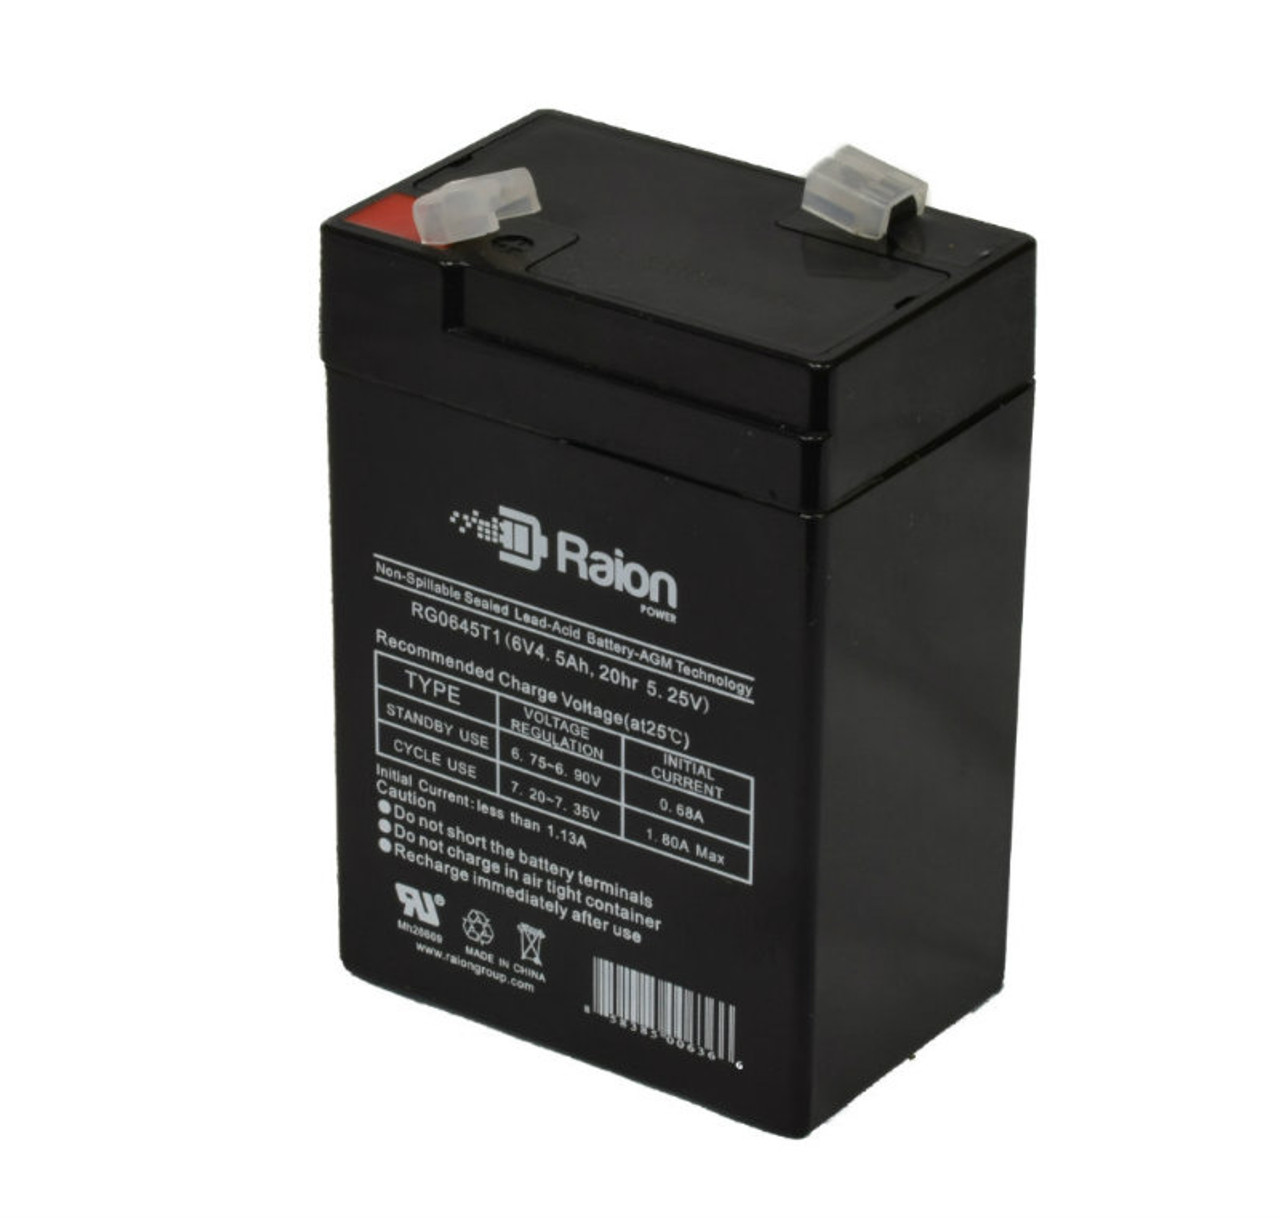 Raion Power RG0645T1 6V 4.5Ah Replacement Battery Cartridge for Peg Perego ED1017 6V Talking Pretty Princess